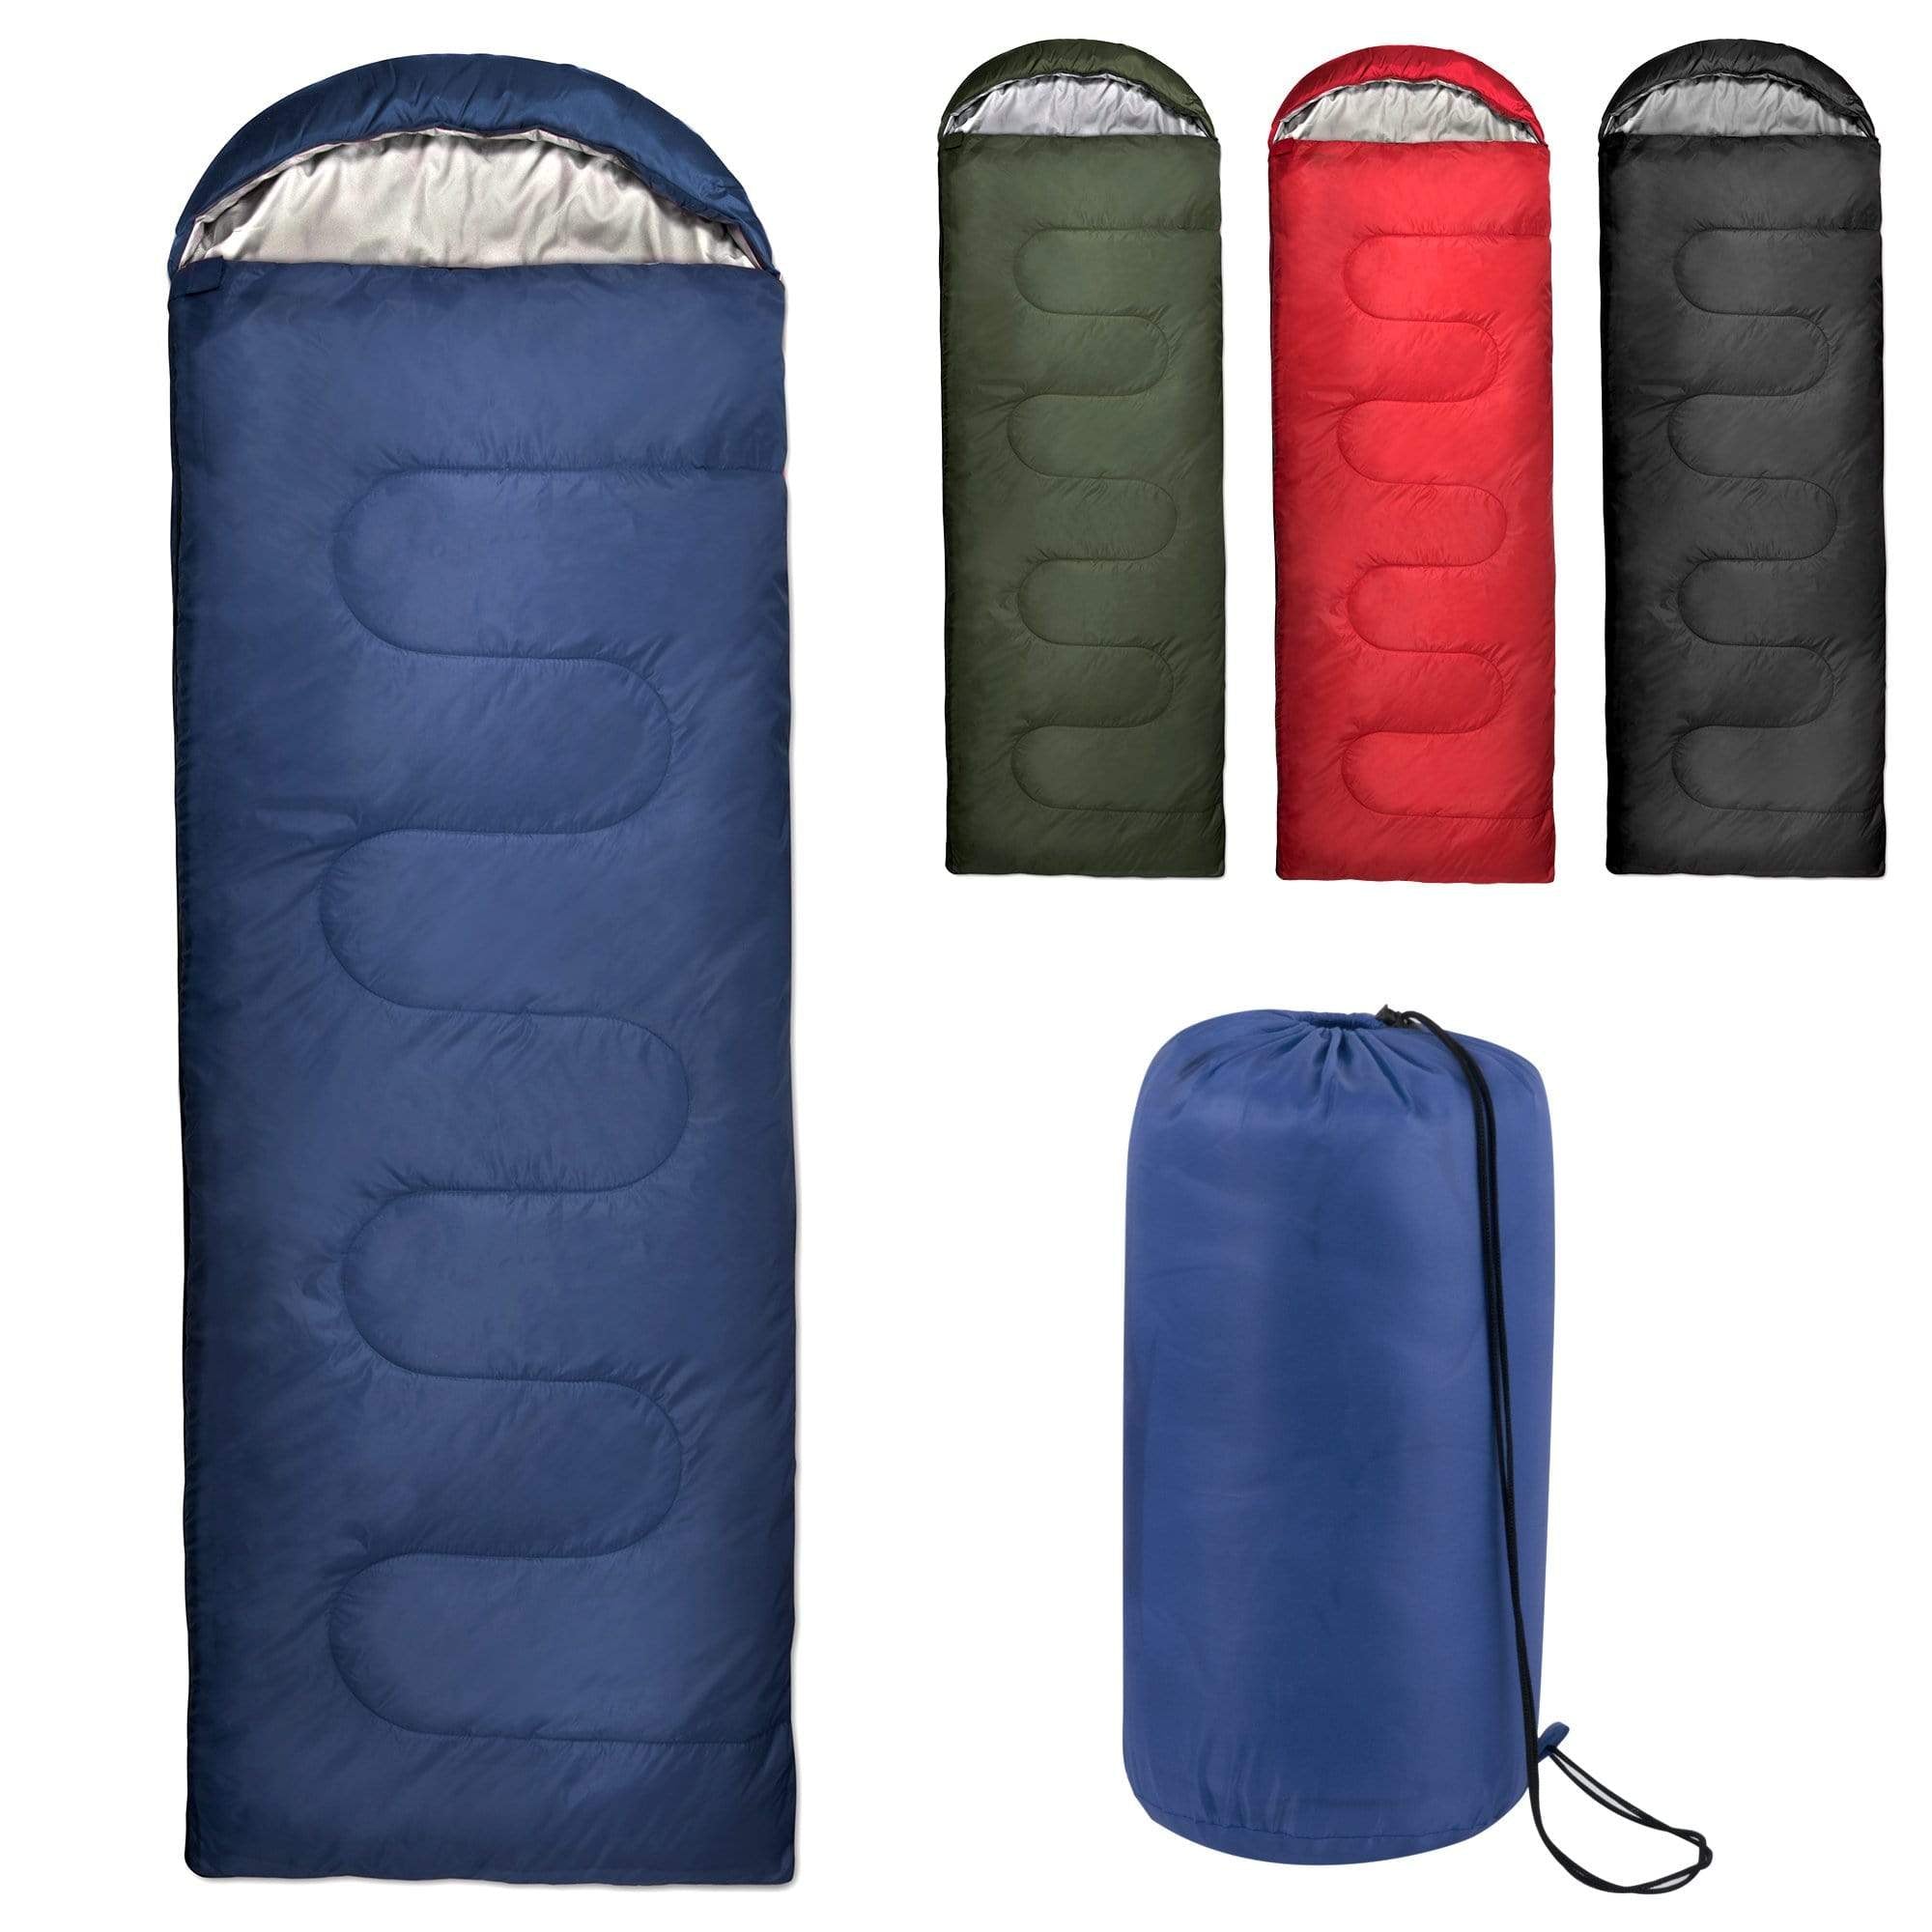 Wholesale Deluxe Sleeping Bags - 50°F — BagsInBulk.com